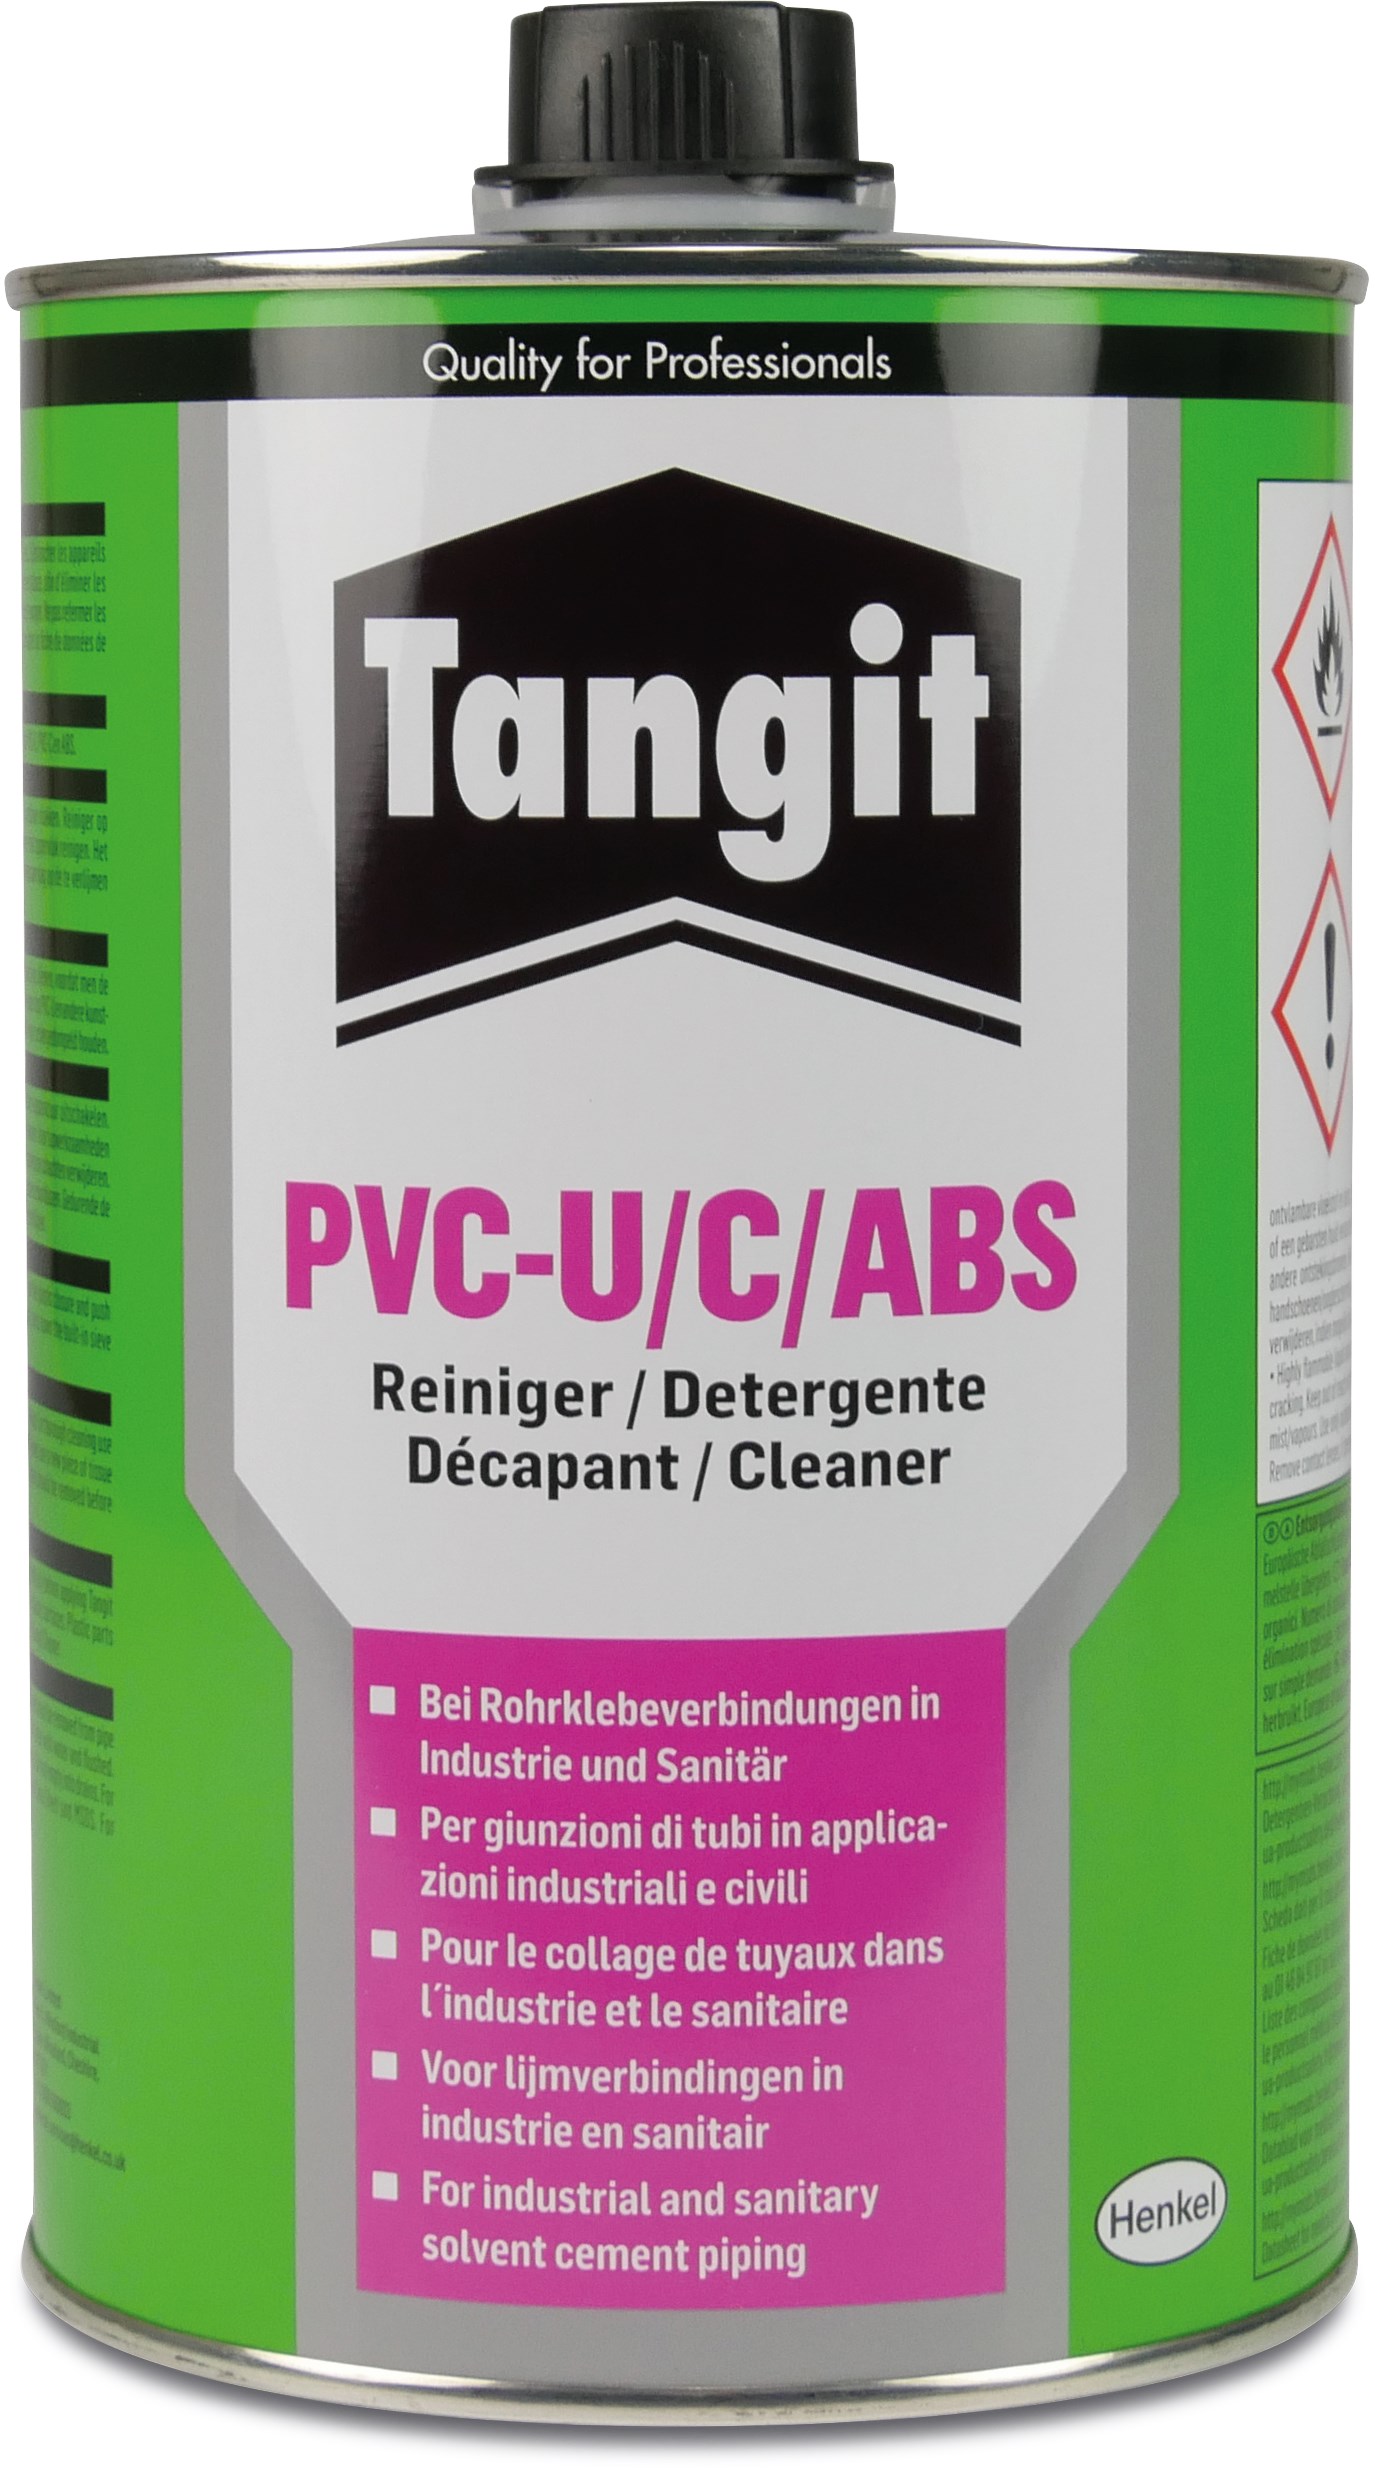 Tangit Reiniger type PVC-U/C ABS Label